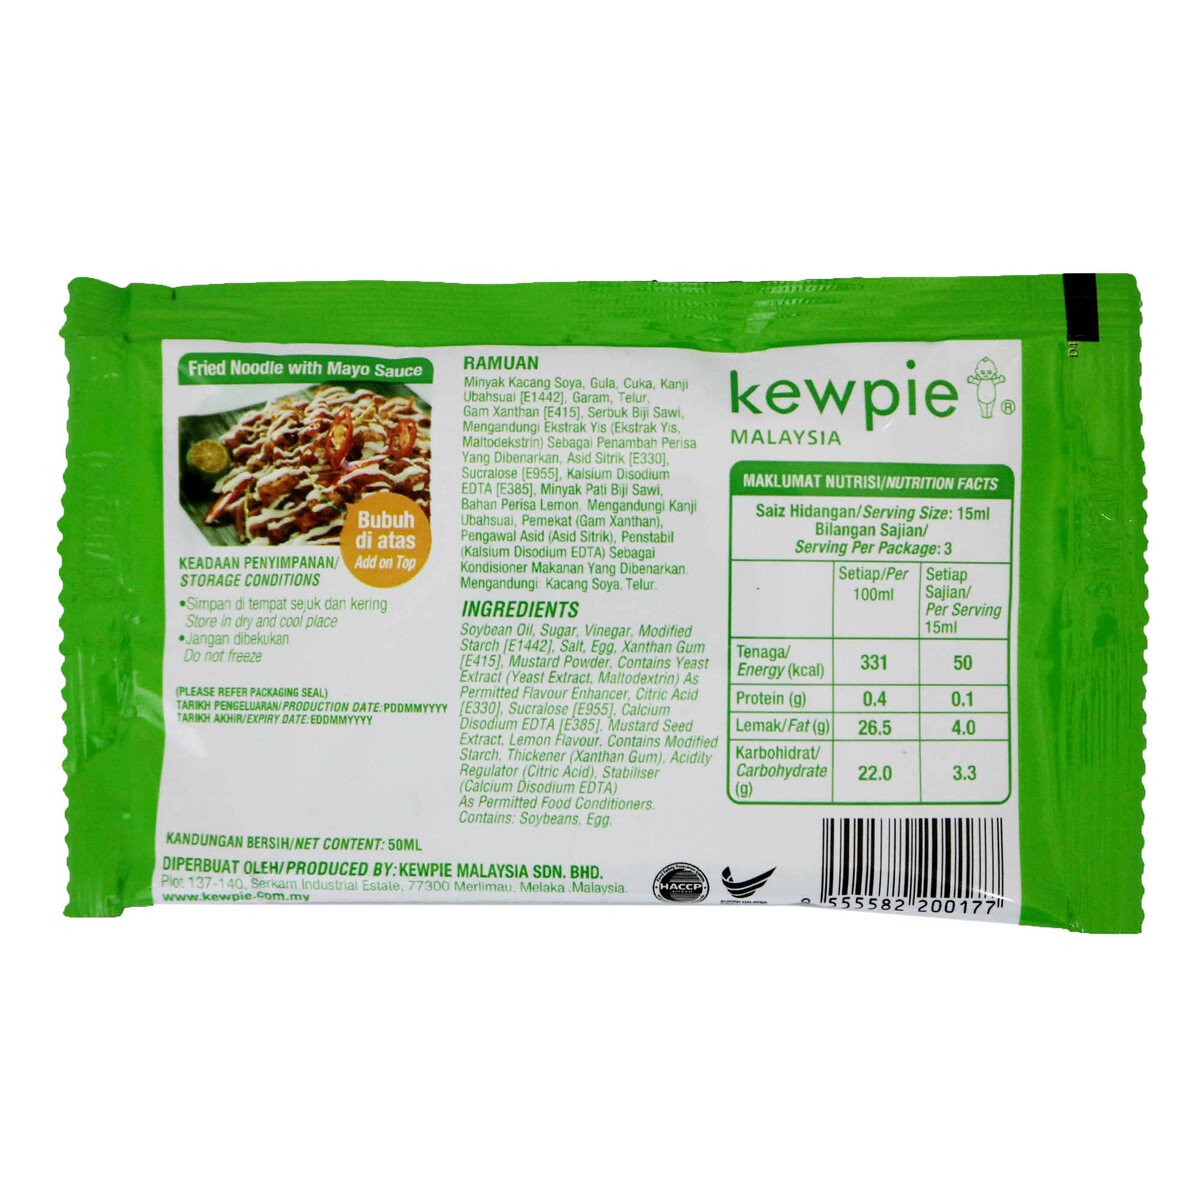 Kewpie Mayo Sauce 50ml